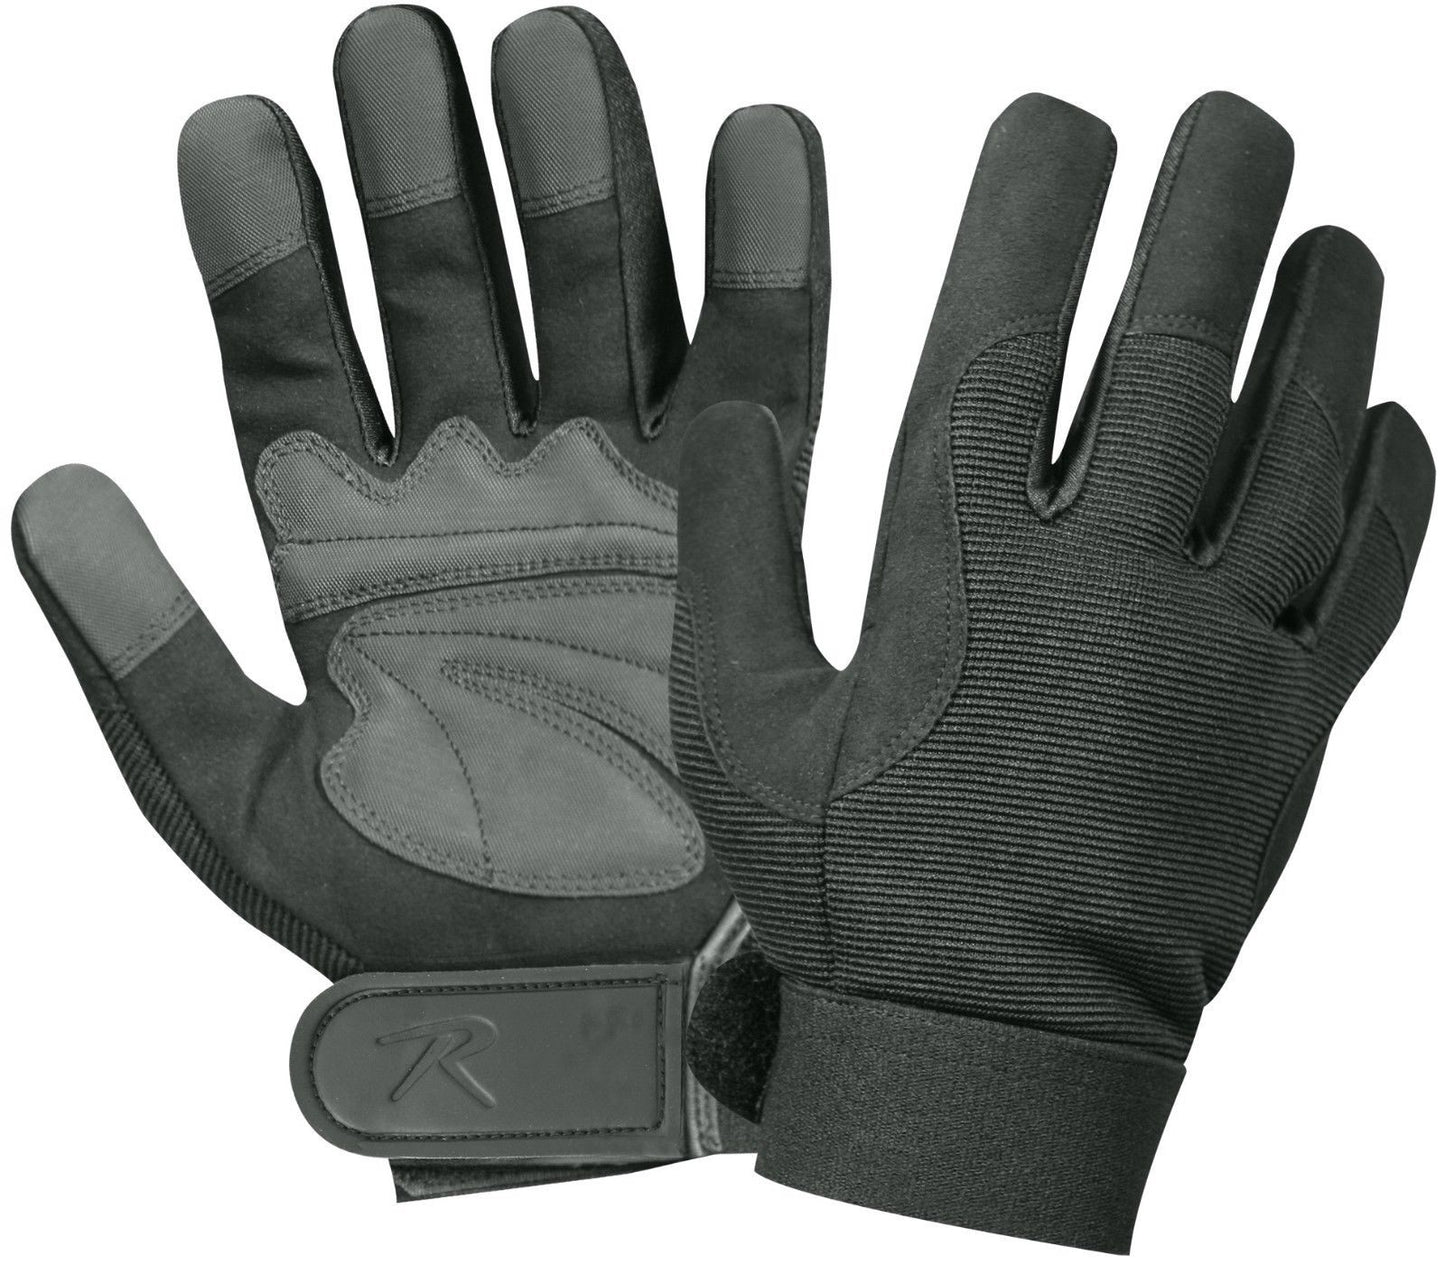 Mechanics Glove - Black/Grey - Bikers, Sports, Everyday, Lightweight